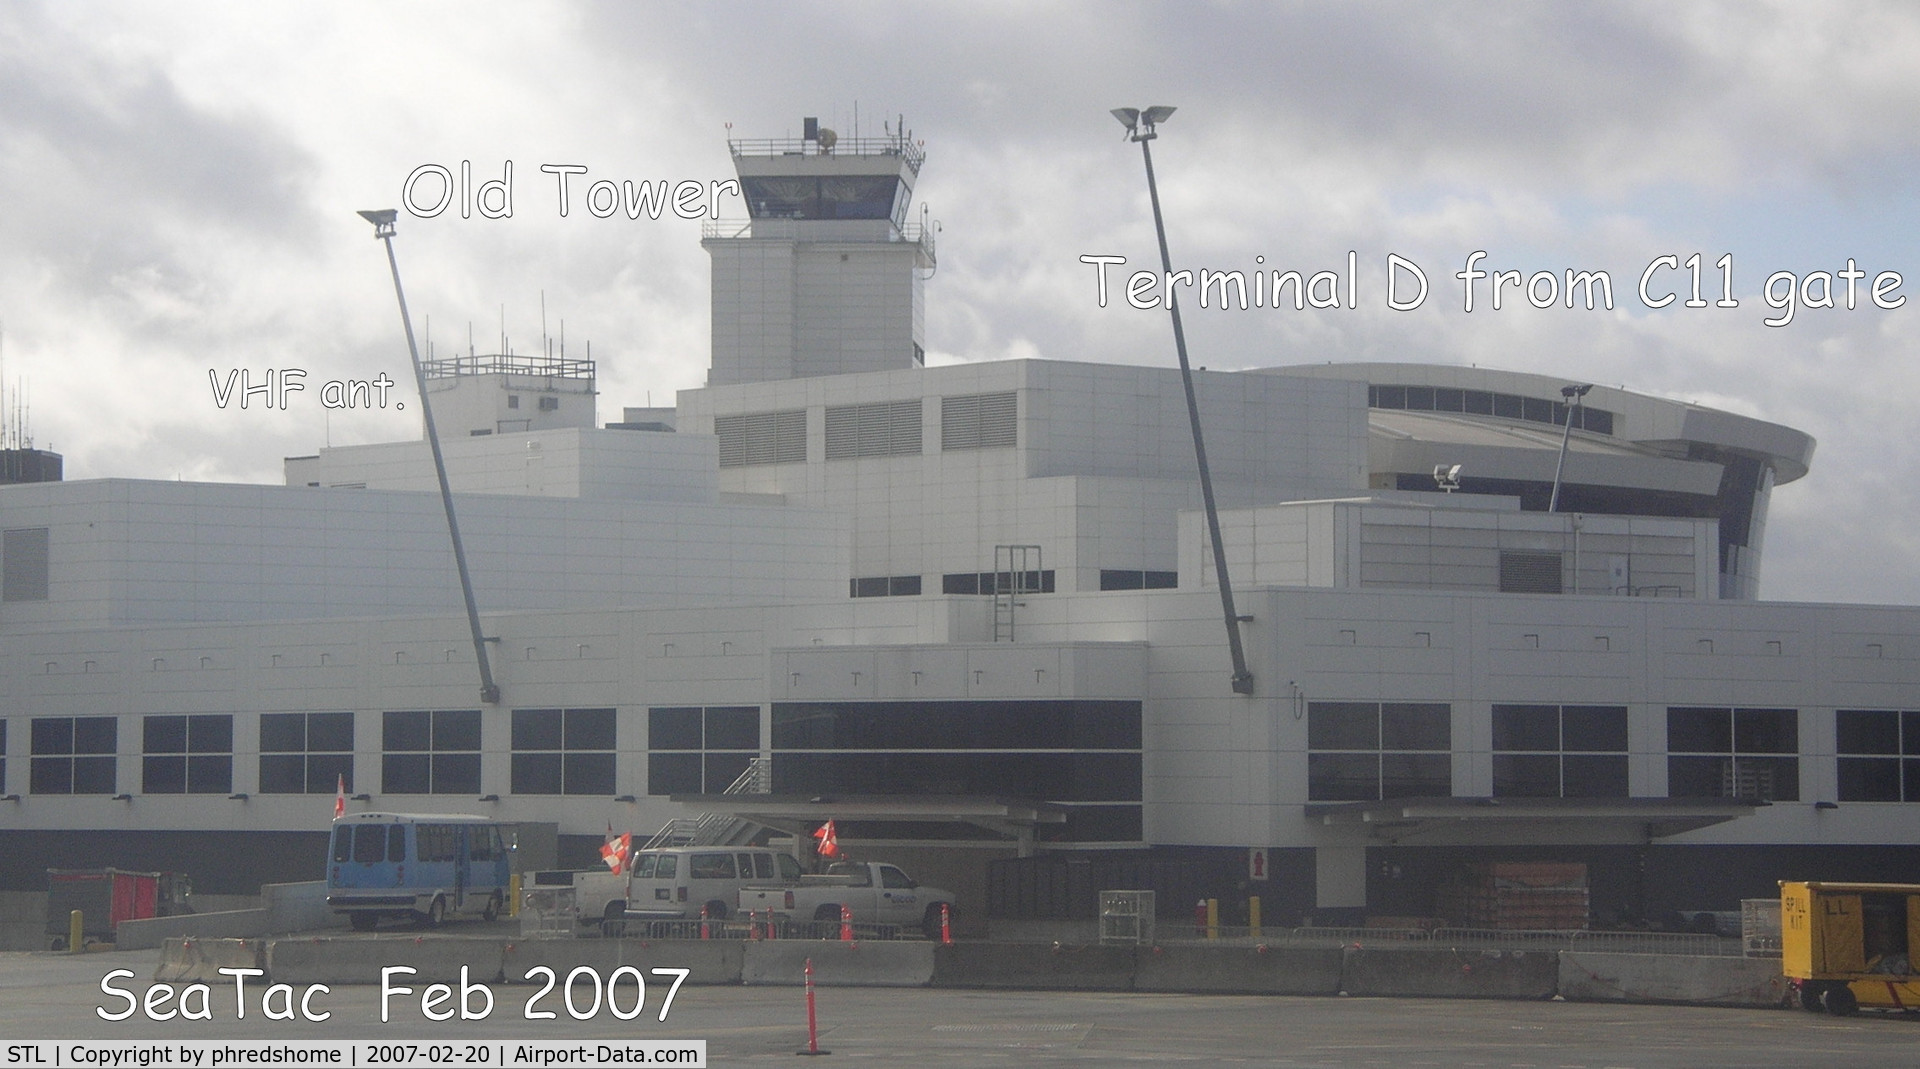 Lambert-st Louis International Airport (STL) - Old tower